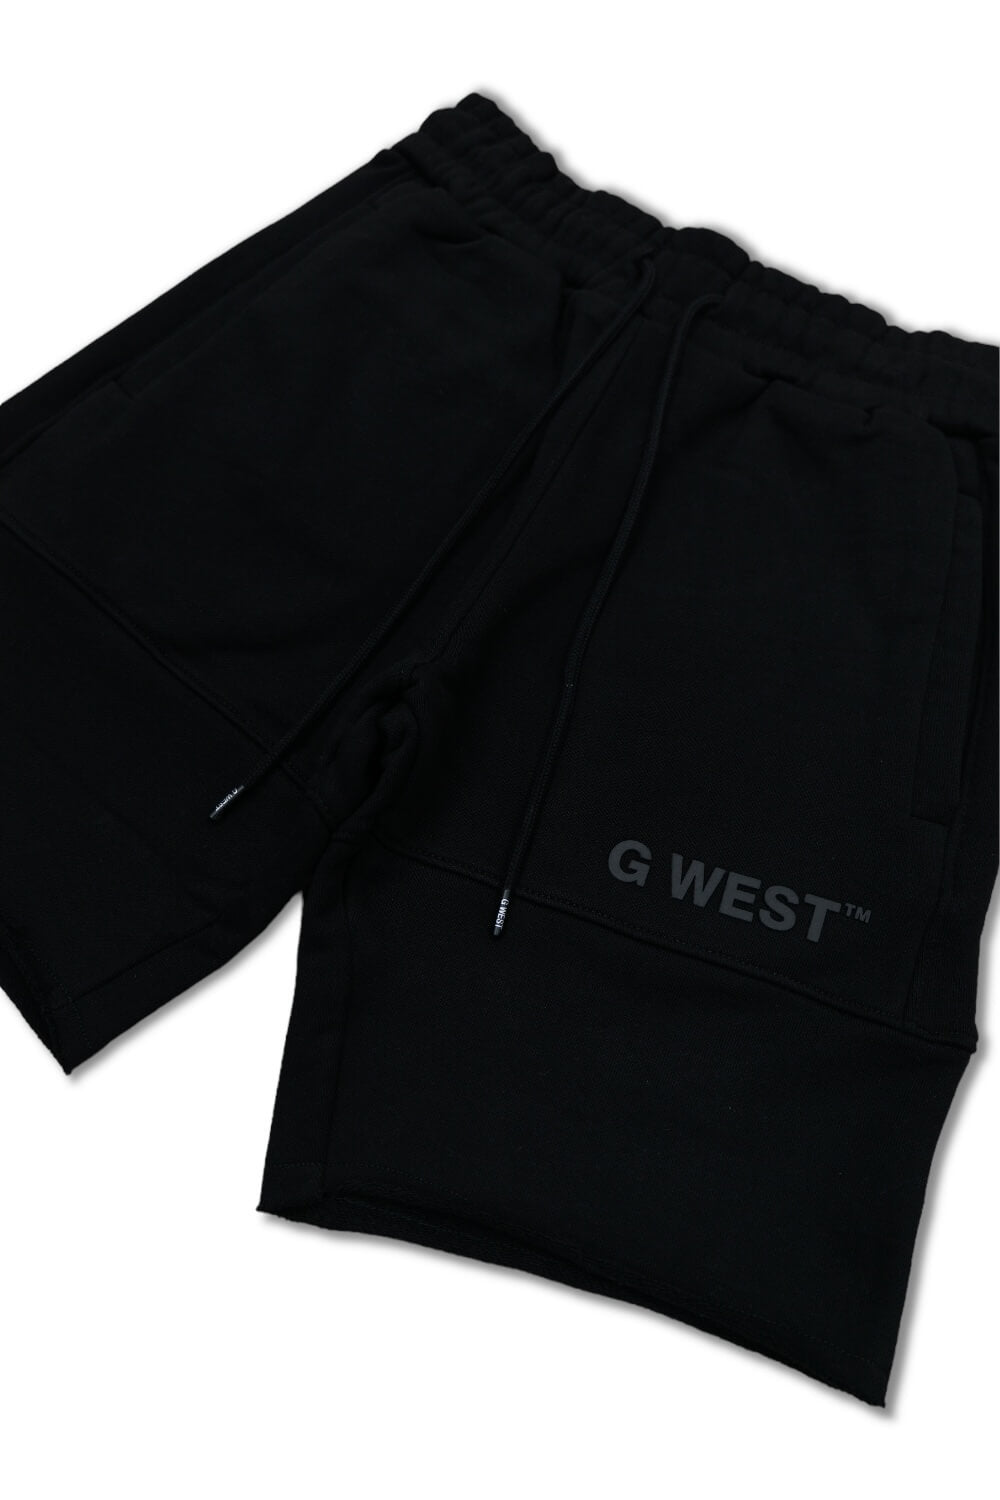 G West Sweat Shorts -Black